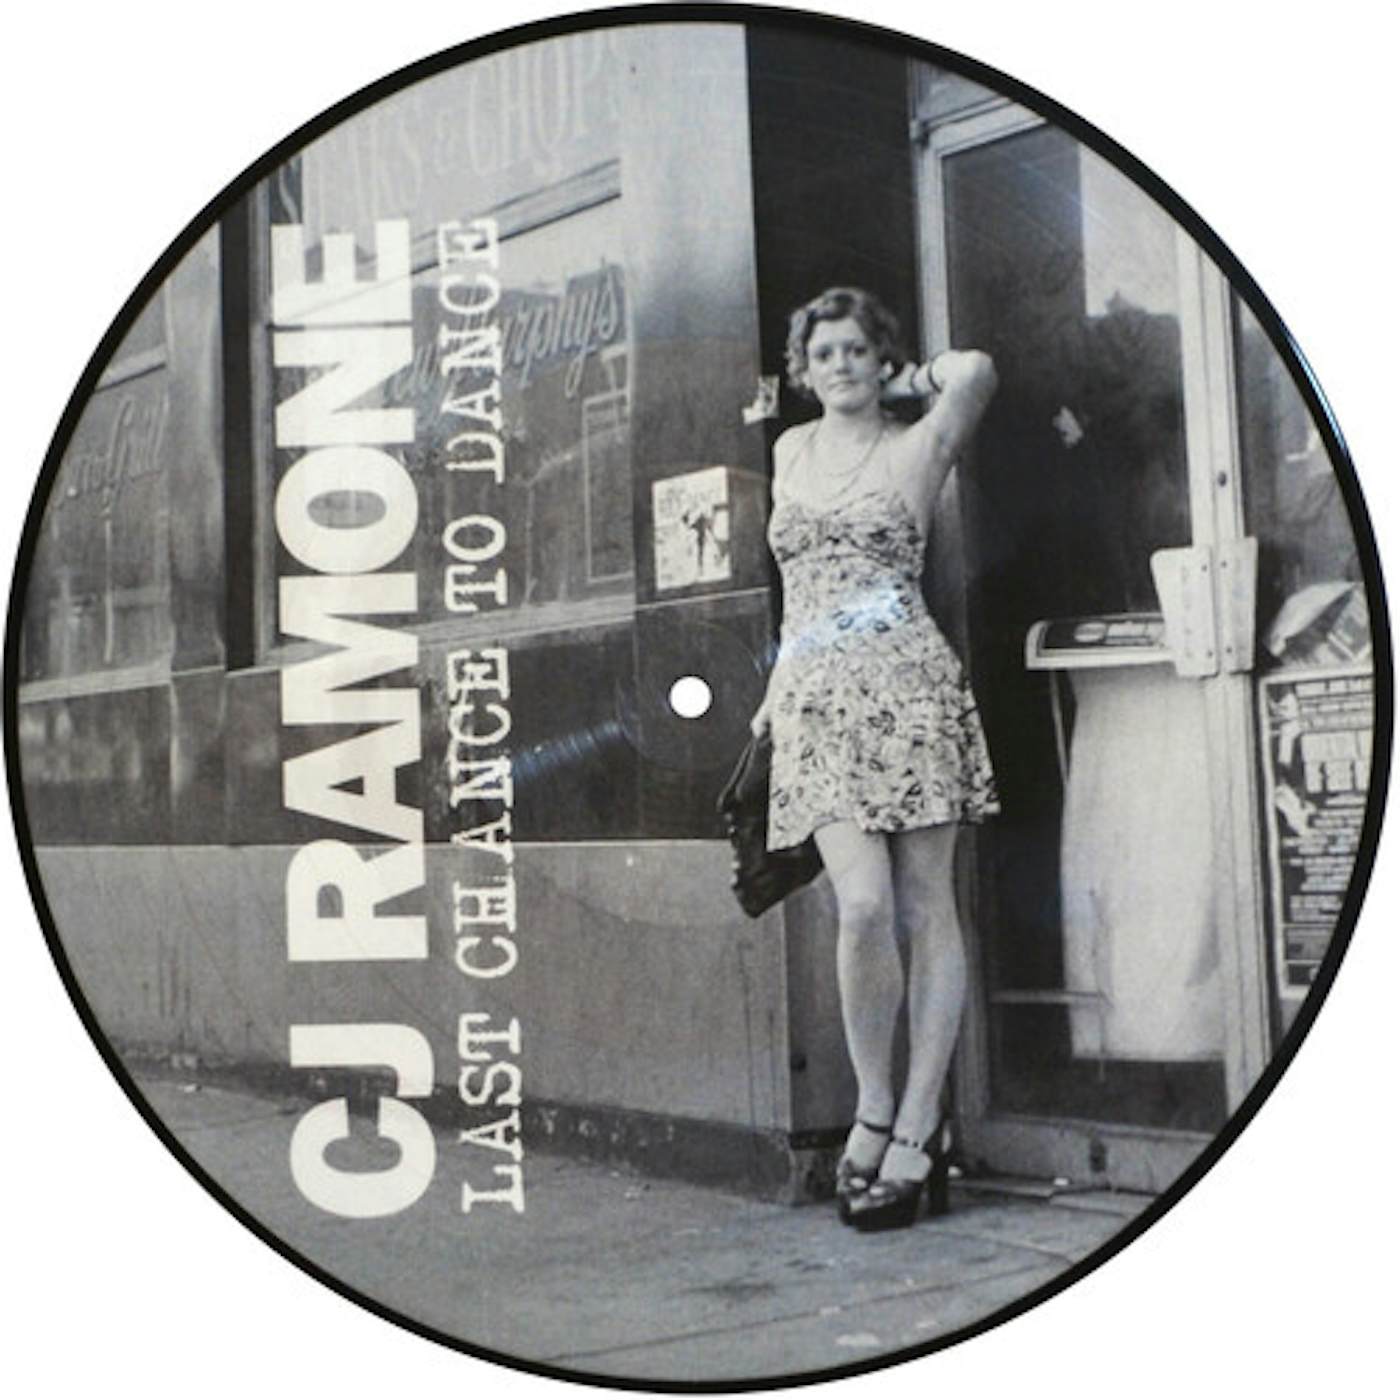 CJ Ramone Last Chance to Dance Vinyl Record